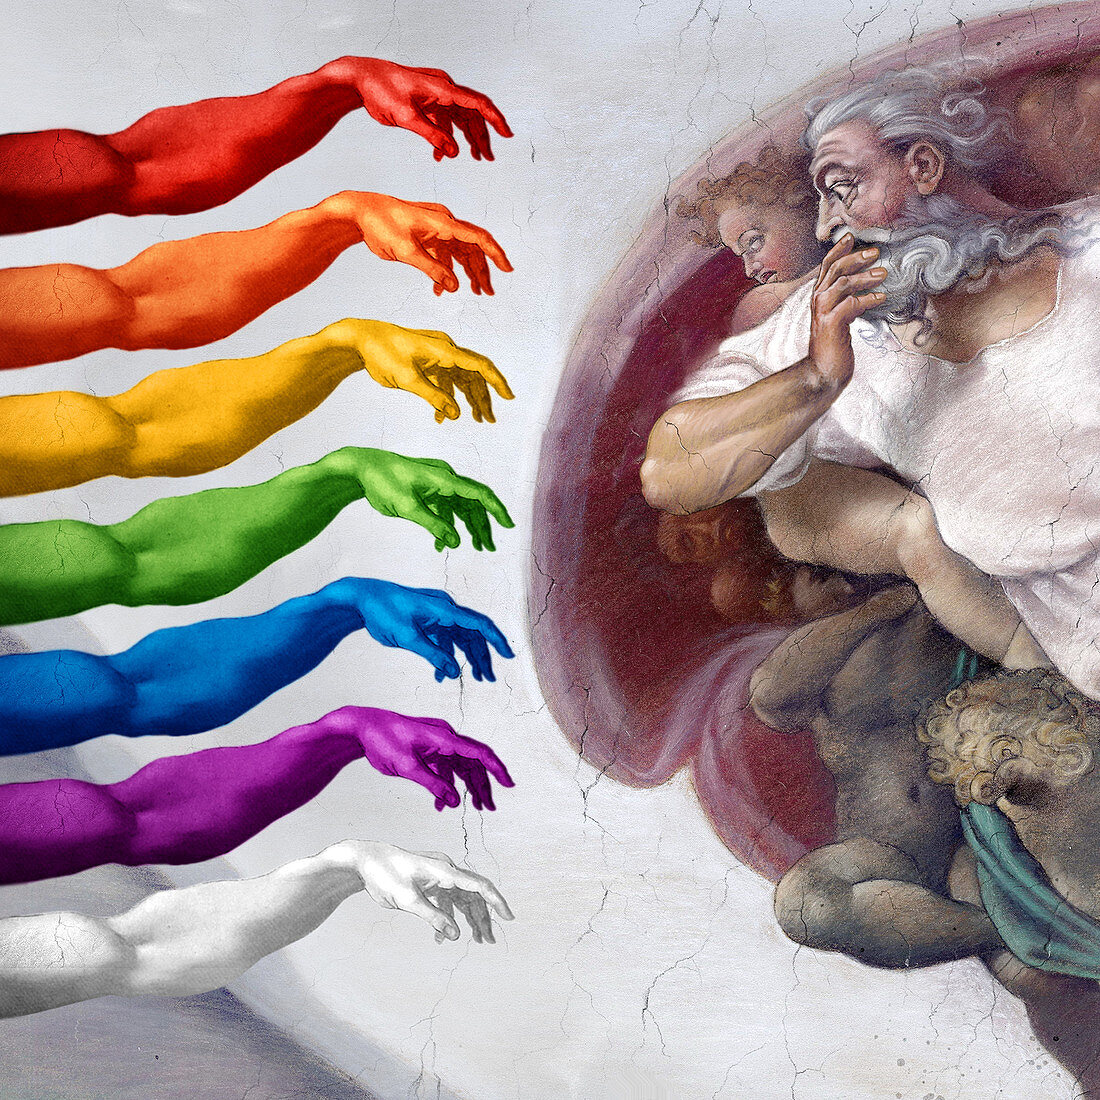 Homophobia, conceptual illustration